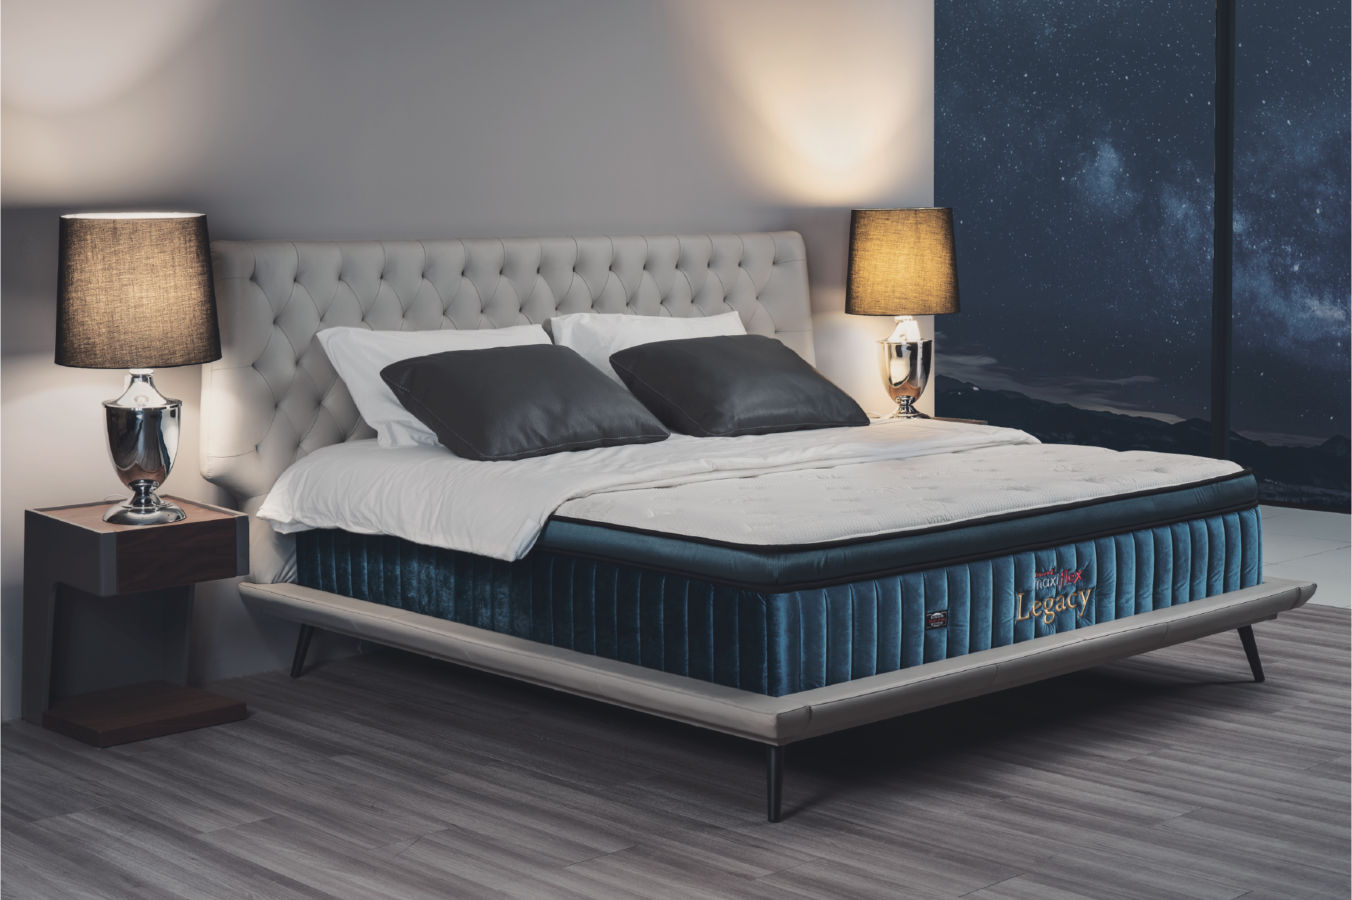 Sleep better with these new Rozel Maxiflex mattresses